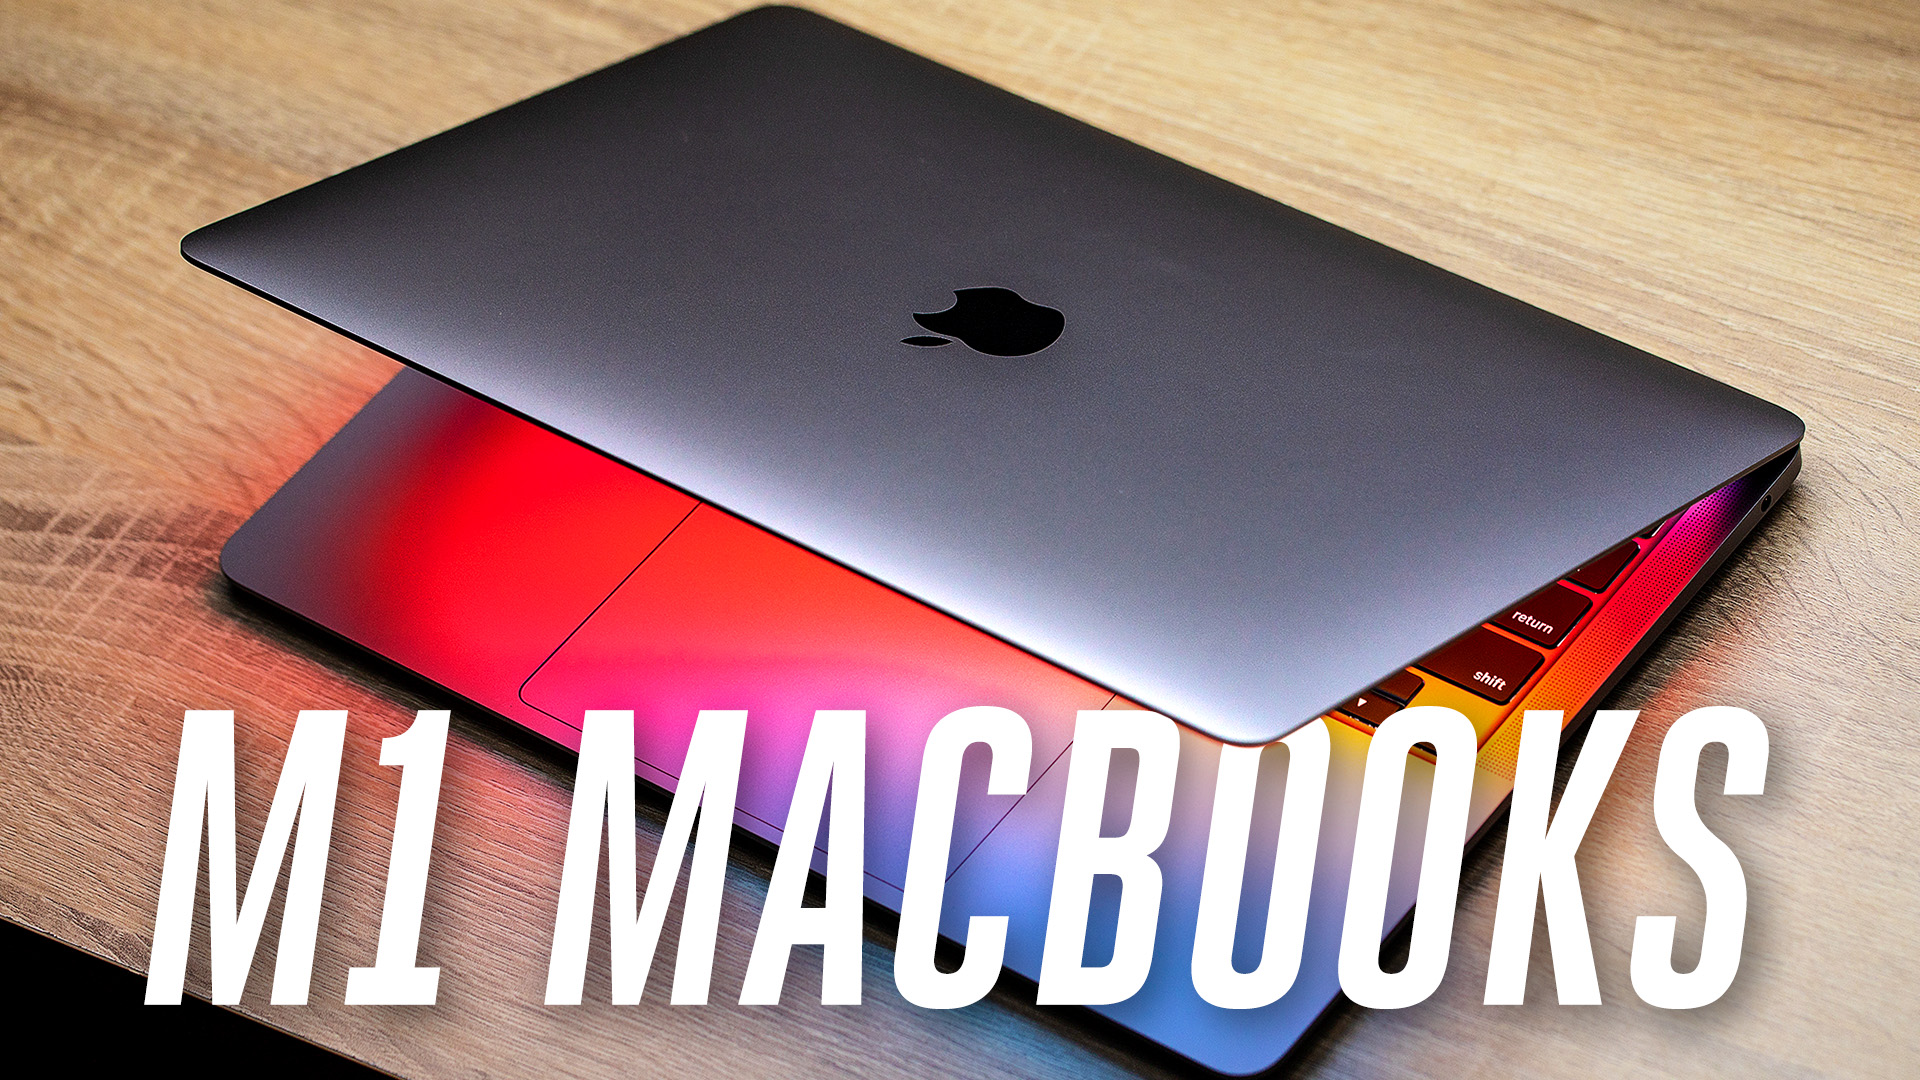 Apple Mac mini (M1, 2020) review